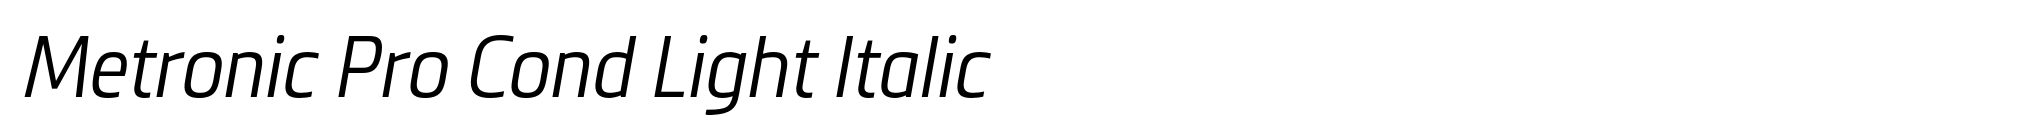 Metronic Pro Cond Light Italic image